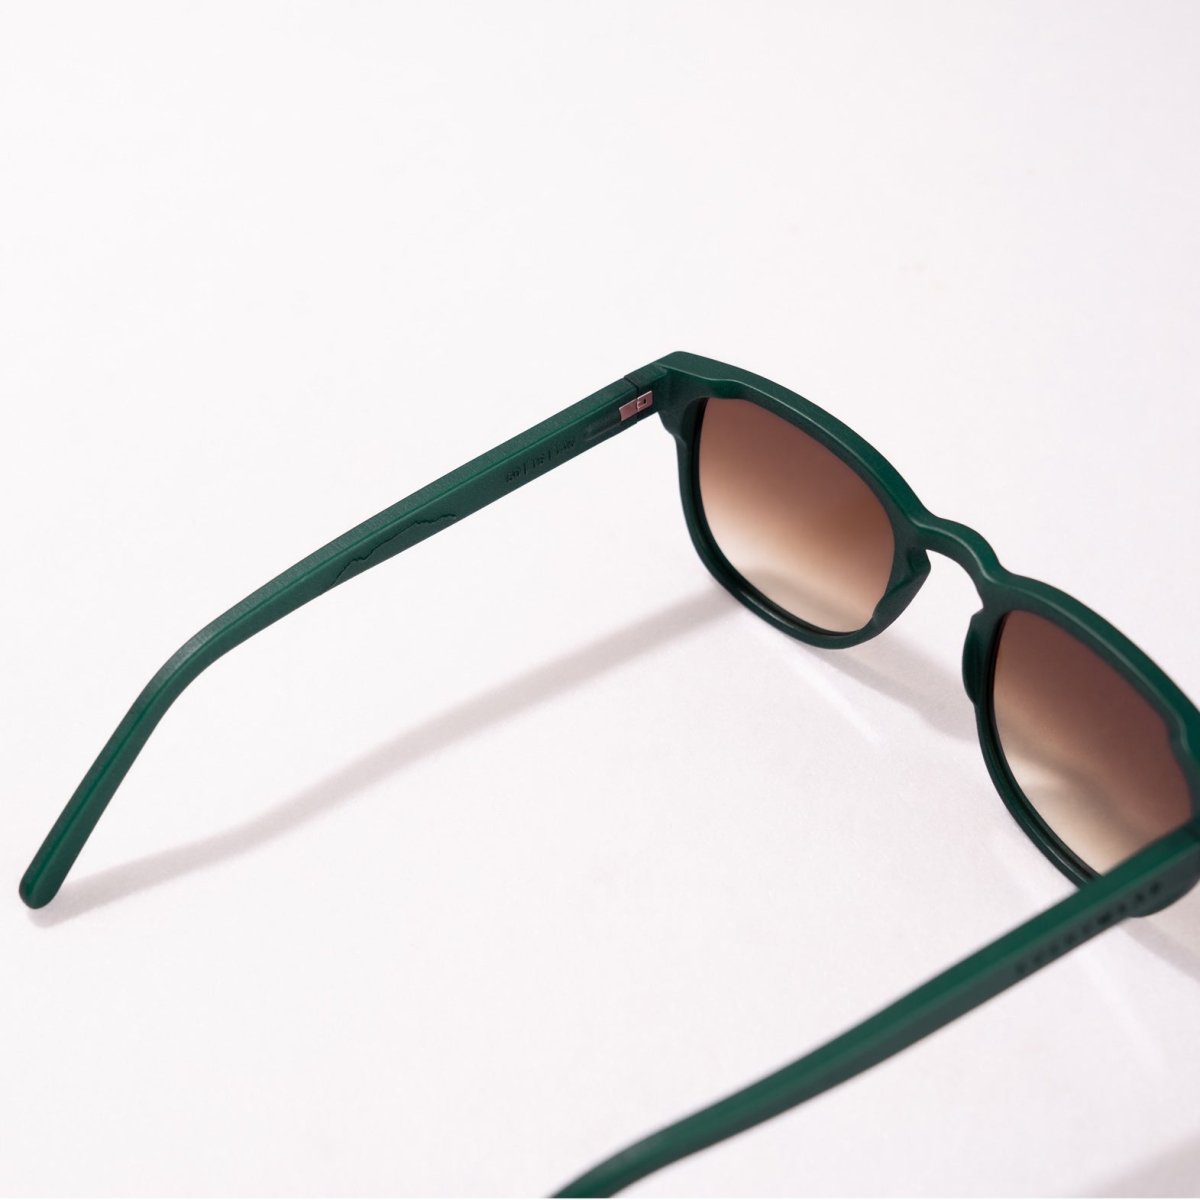 Camber Ebony Wood Polarized Sunglasses from The Wood Reserve